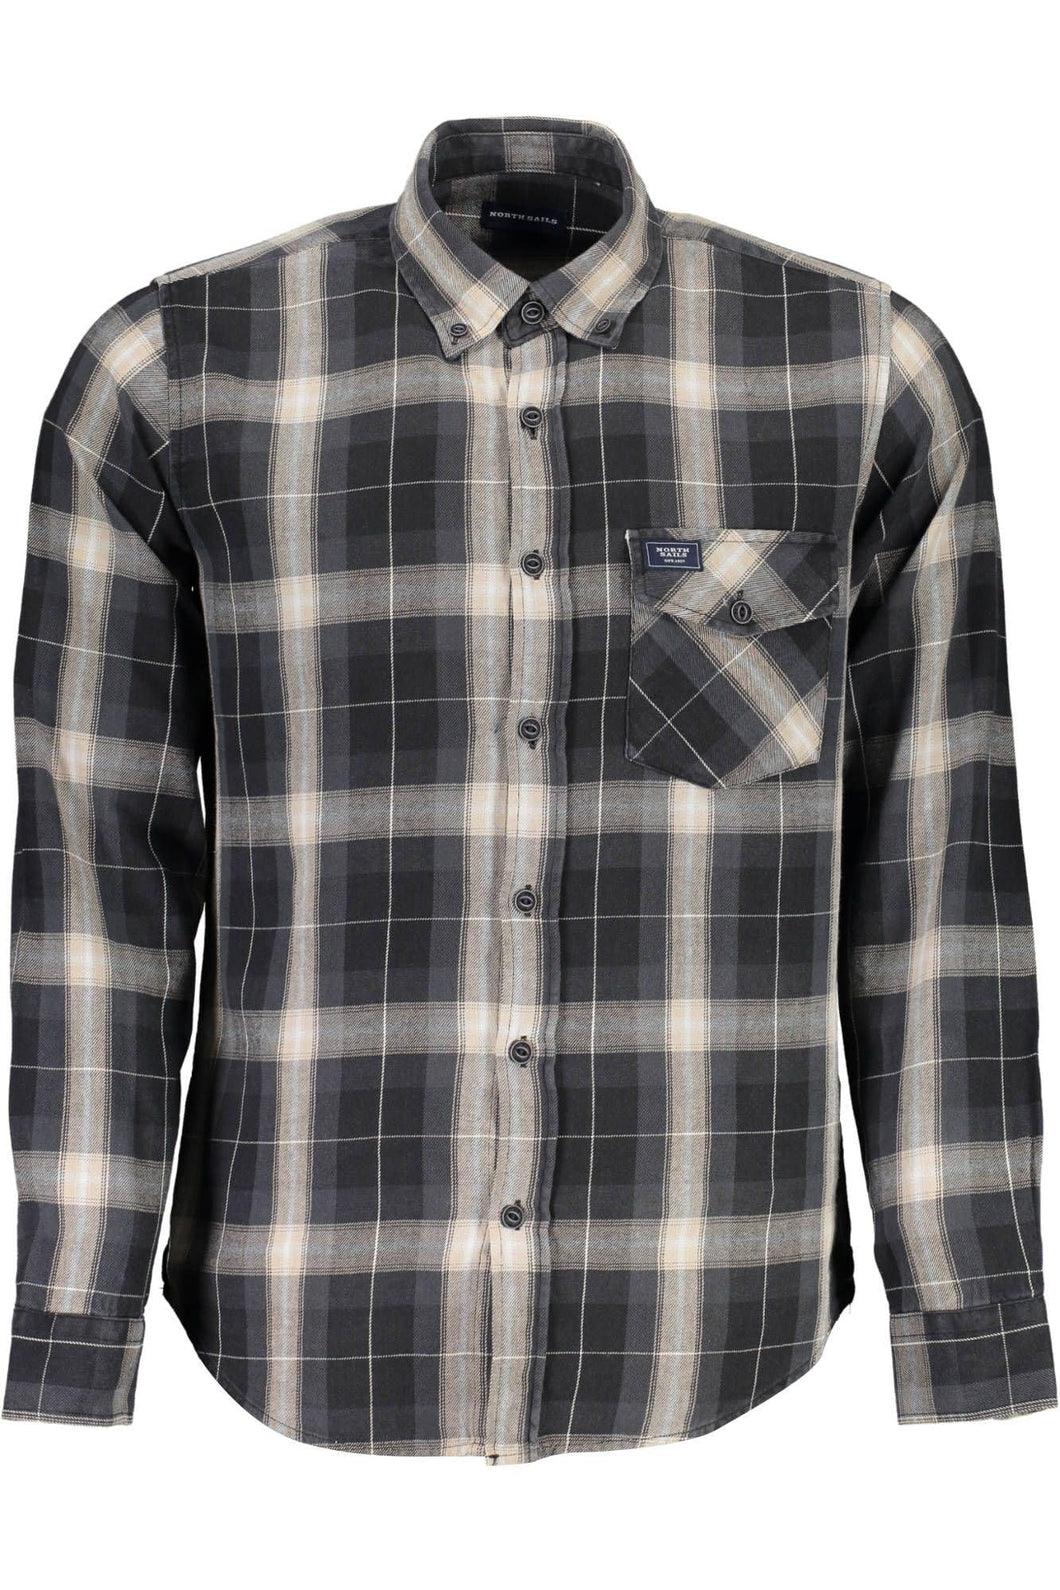 NORTH SAILS Indigo Check Shirt B.d Camicia Button-Down Uomo